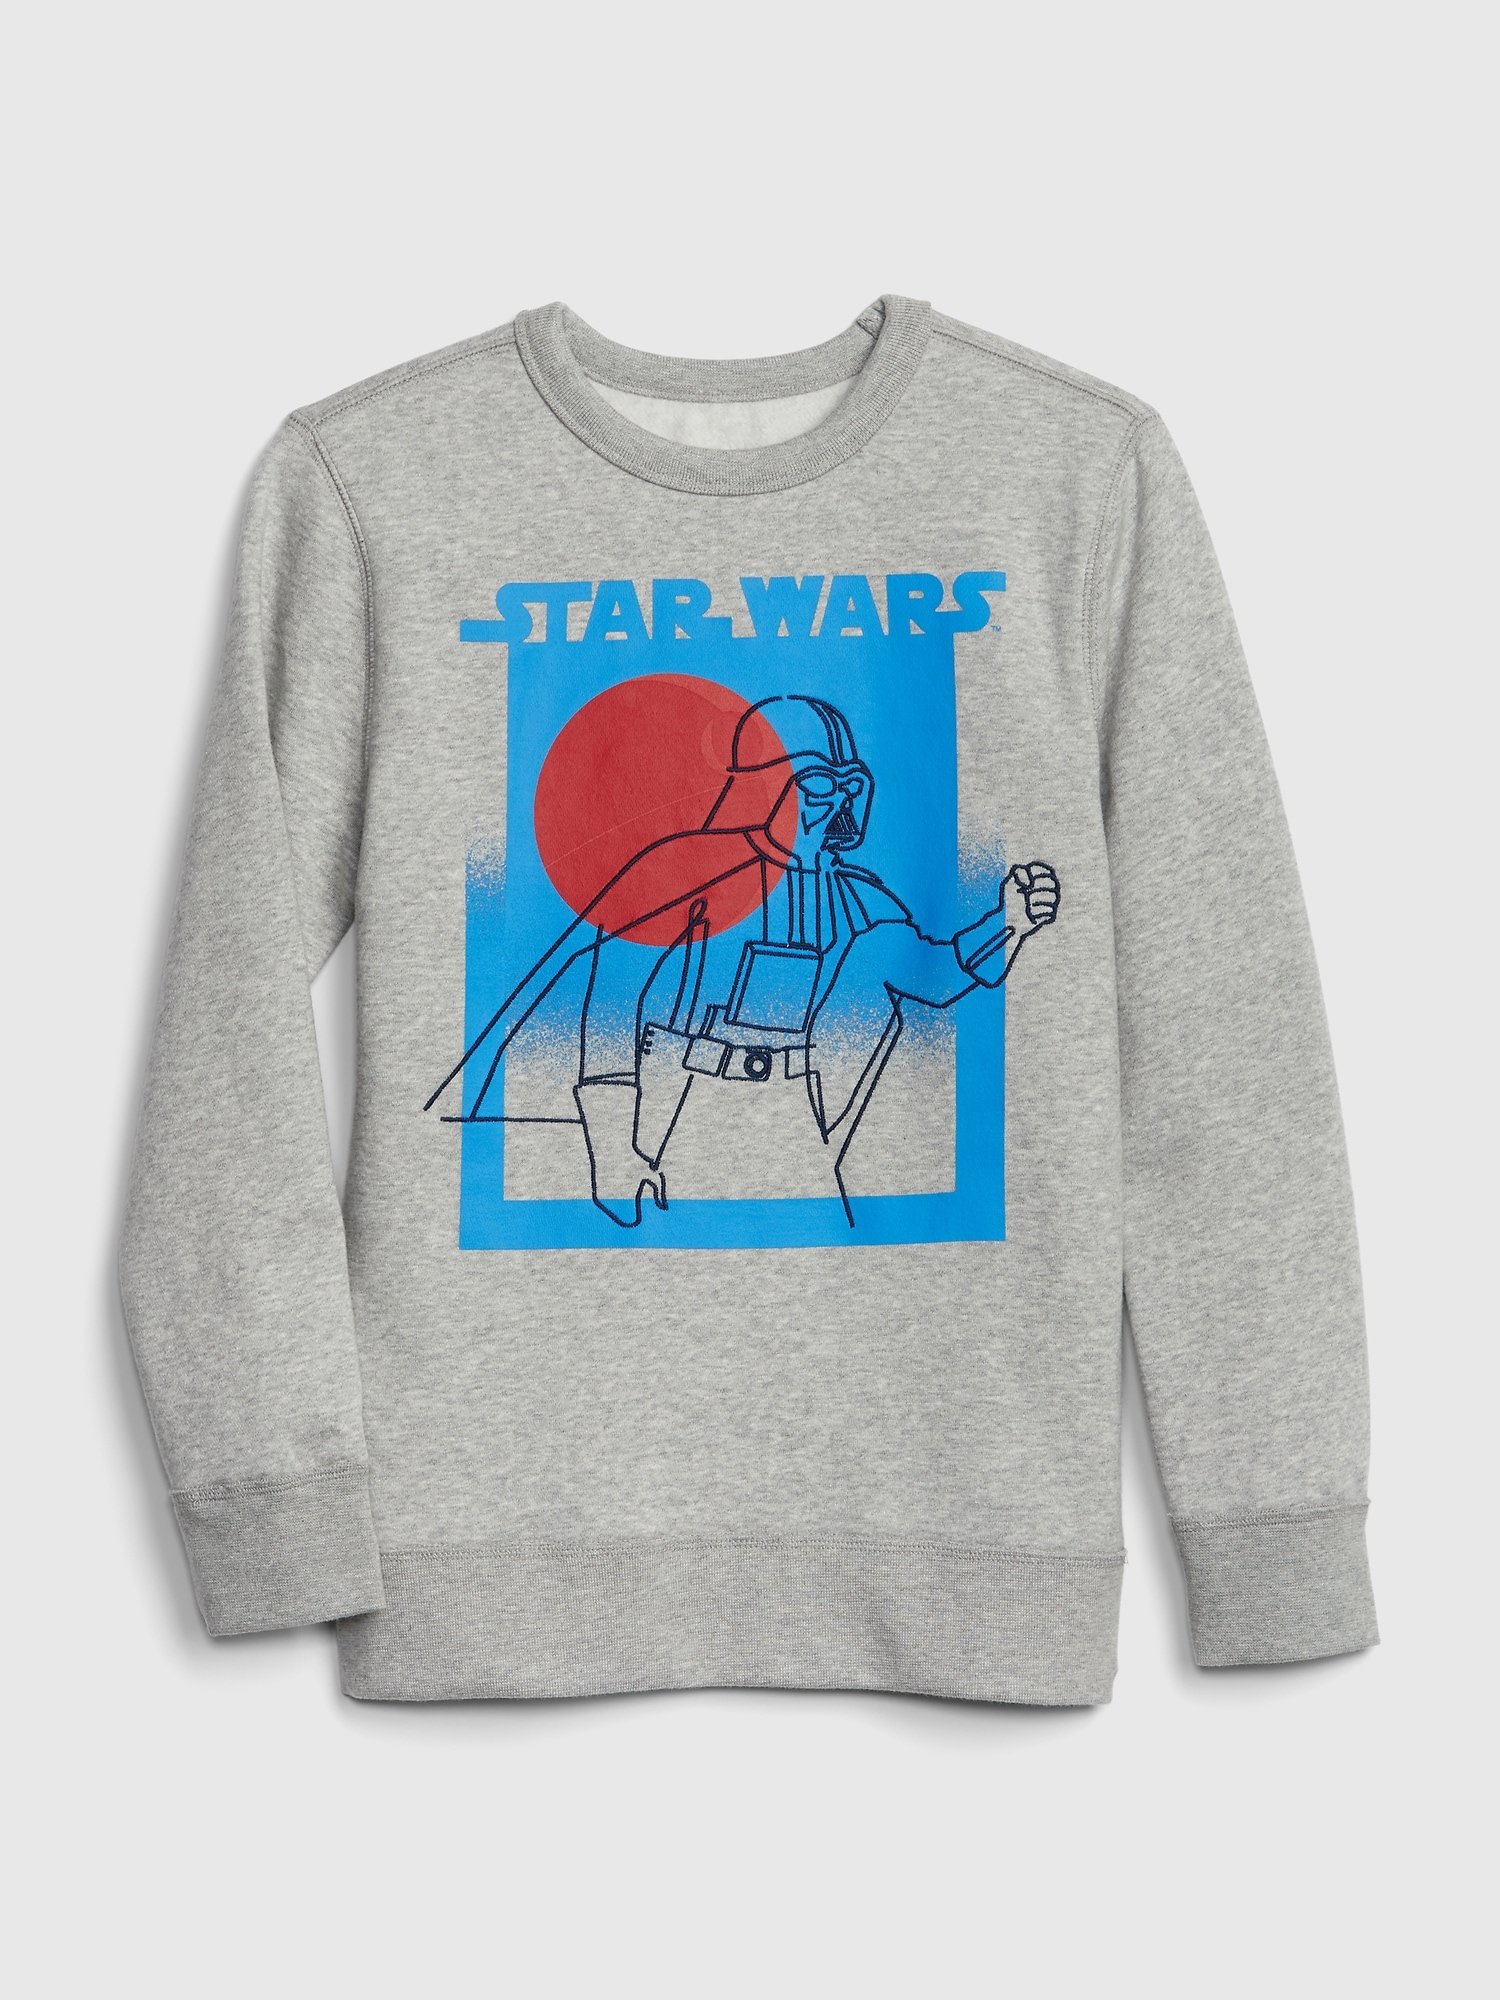 Star Wars Sweatshirt product image